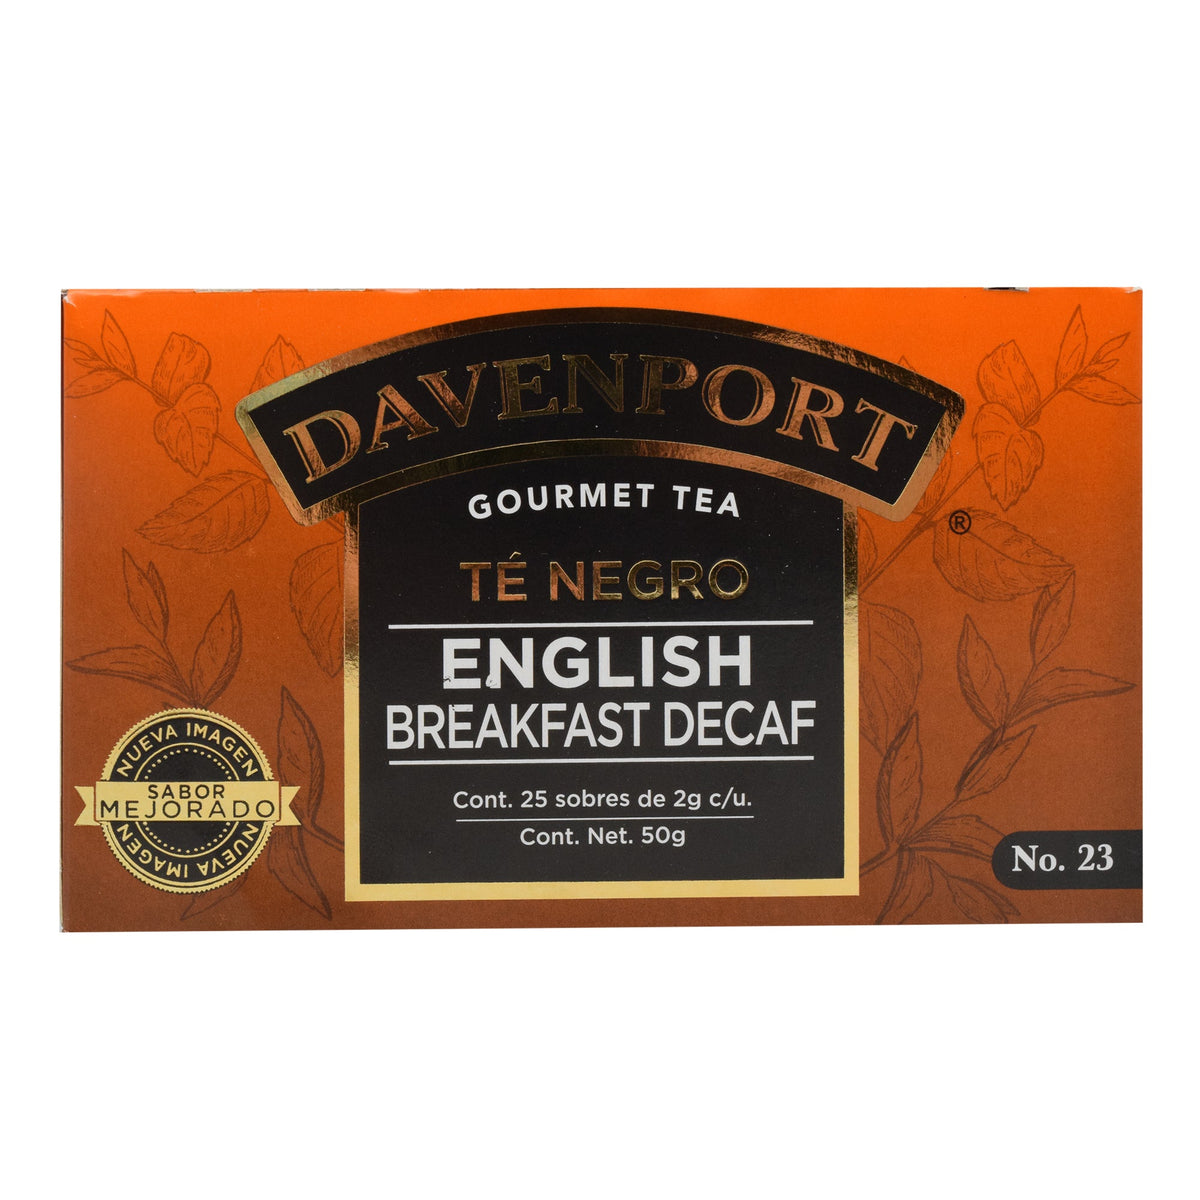 DAVENPORT ENGLISH BREAKFAST DECAF